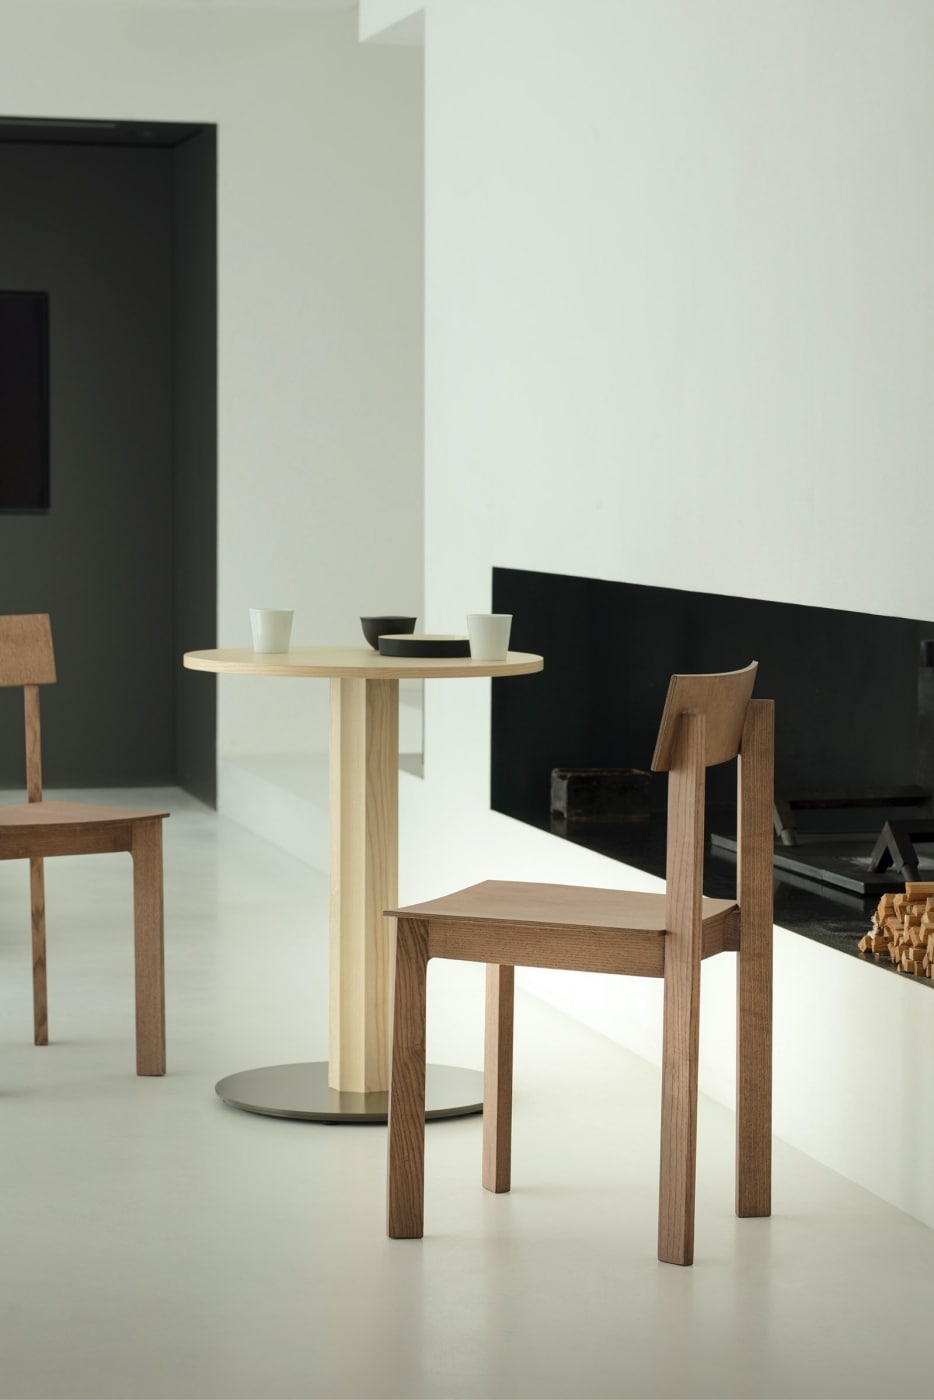 Furniture Design by London Studio Mentsen 10